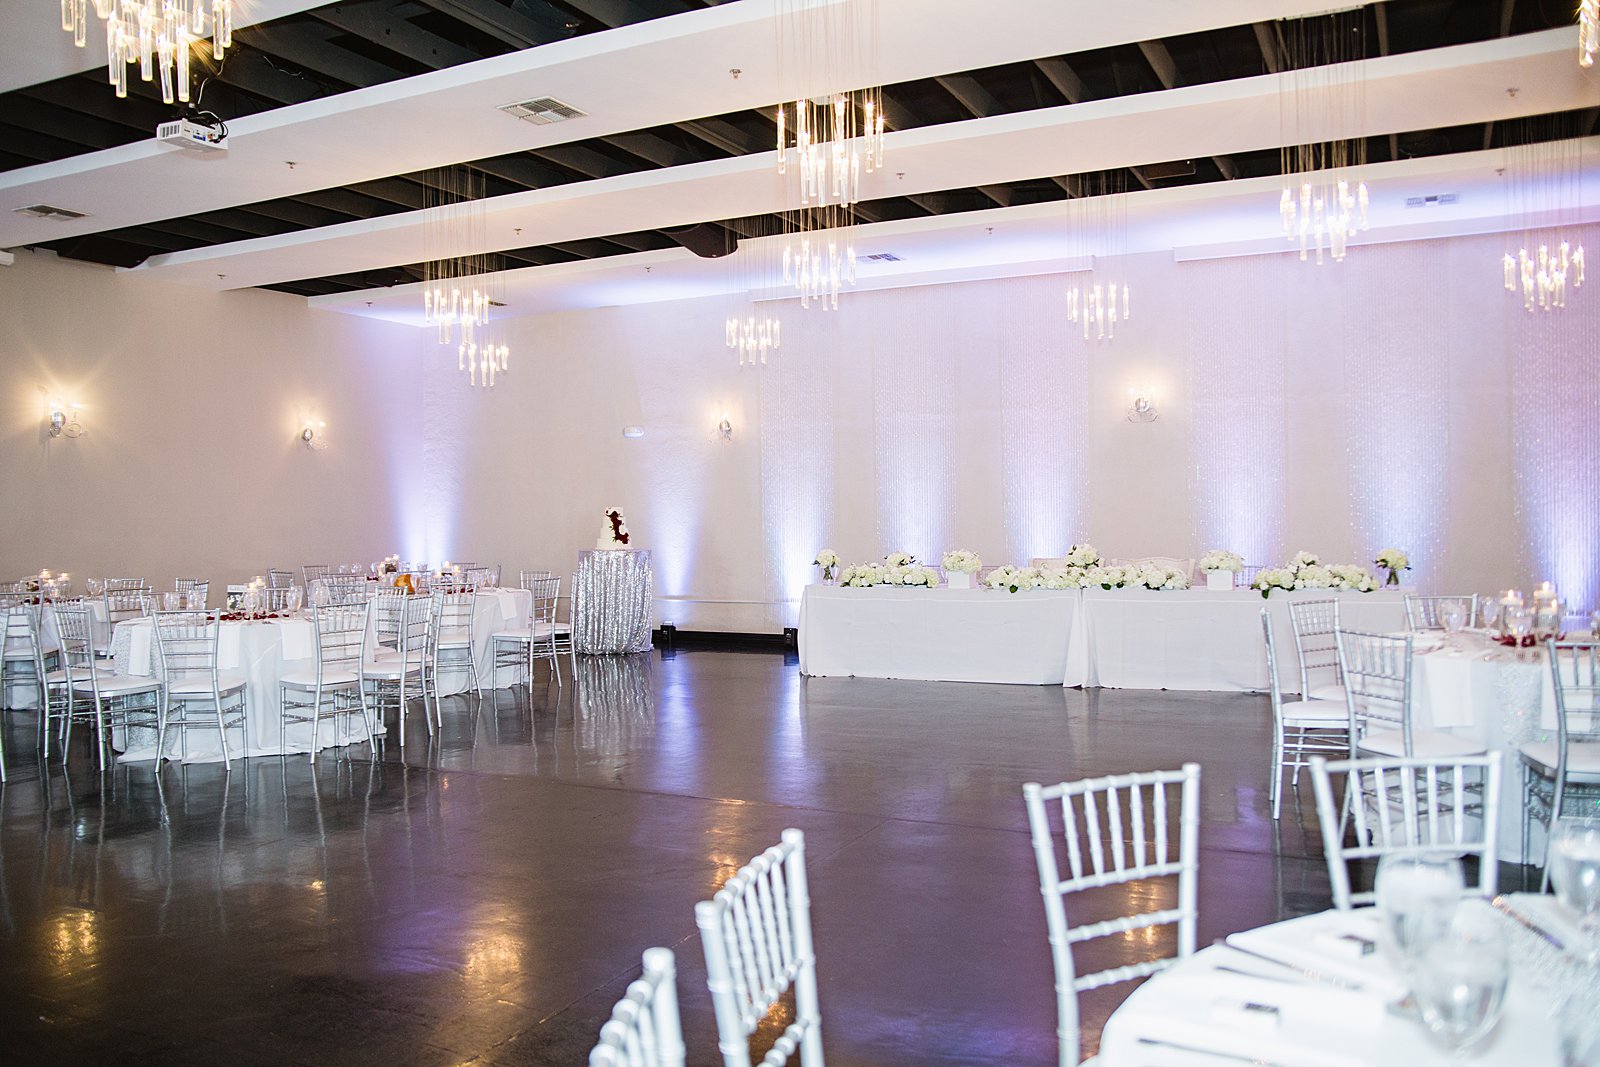 Bright and modern wedding reception at SoHo63 by Phoenix wedding photographer PMA Photography.